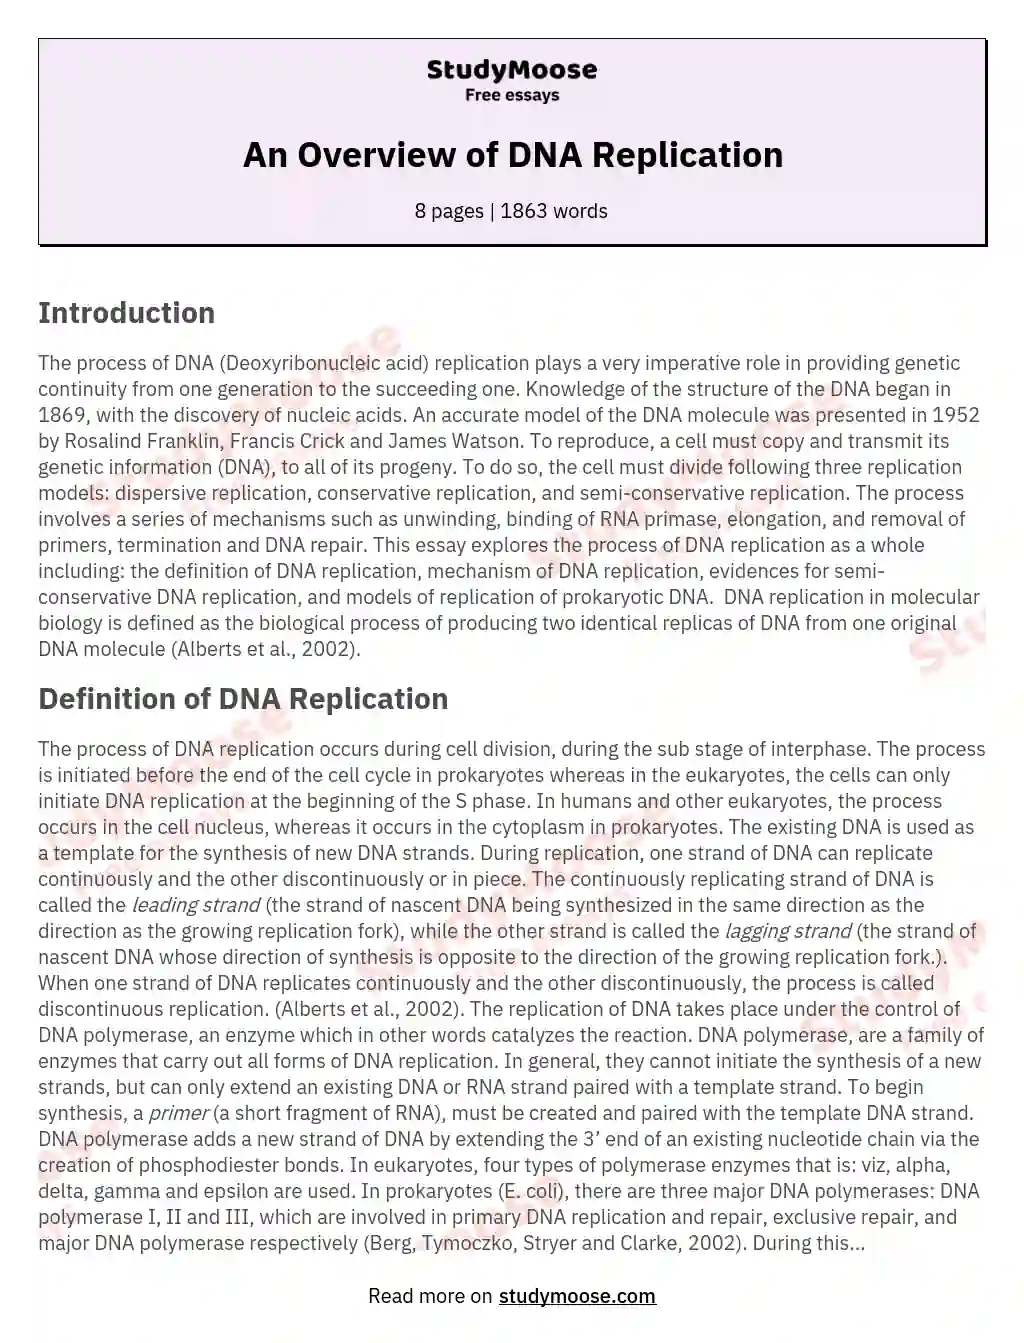 dna replication sample essay